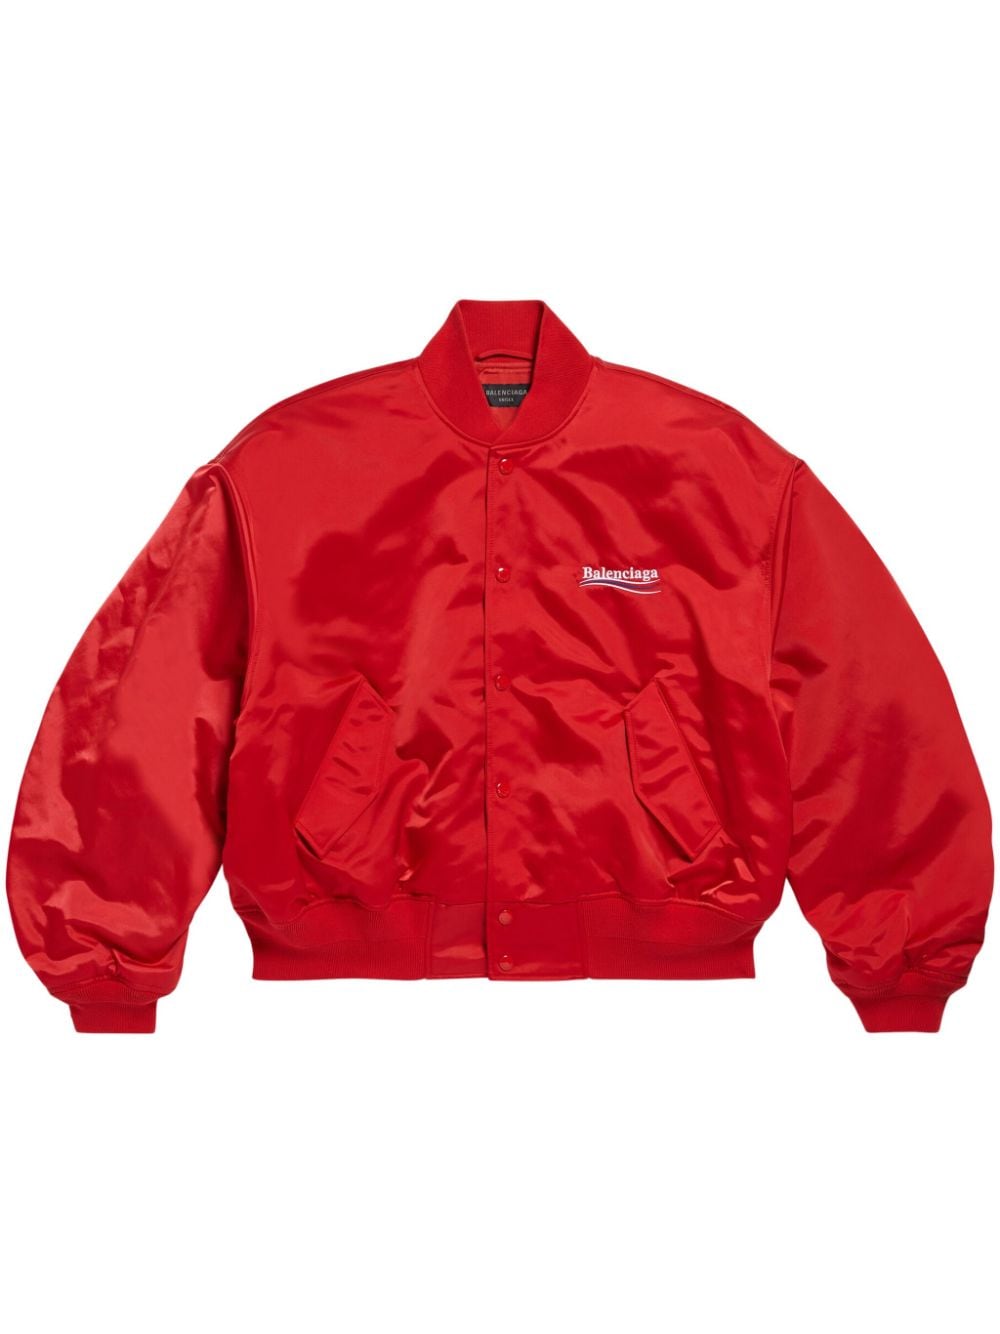 Balenciaga Political Campaign varsity jacket - Red